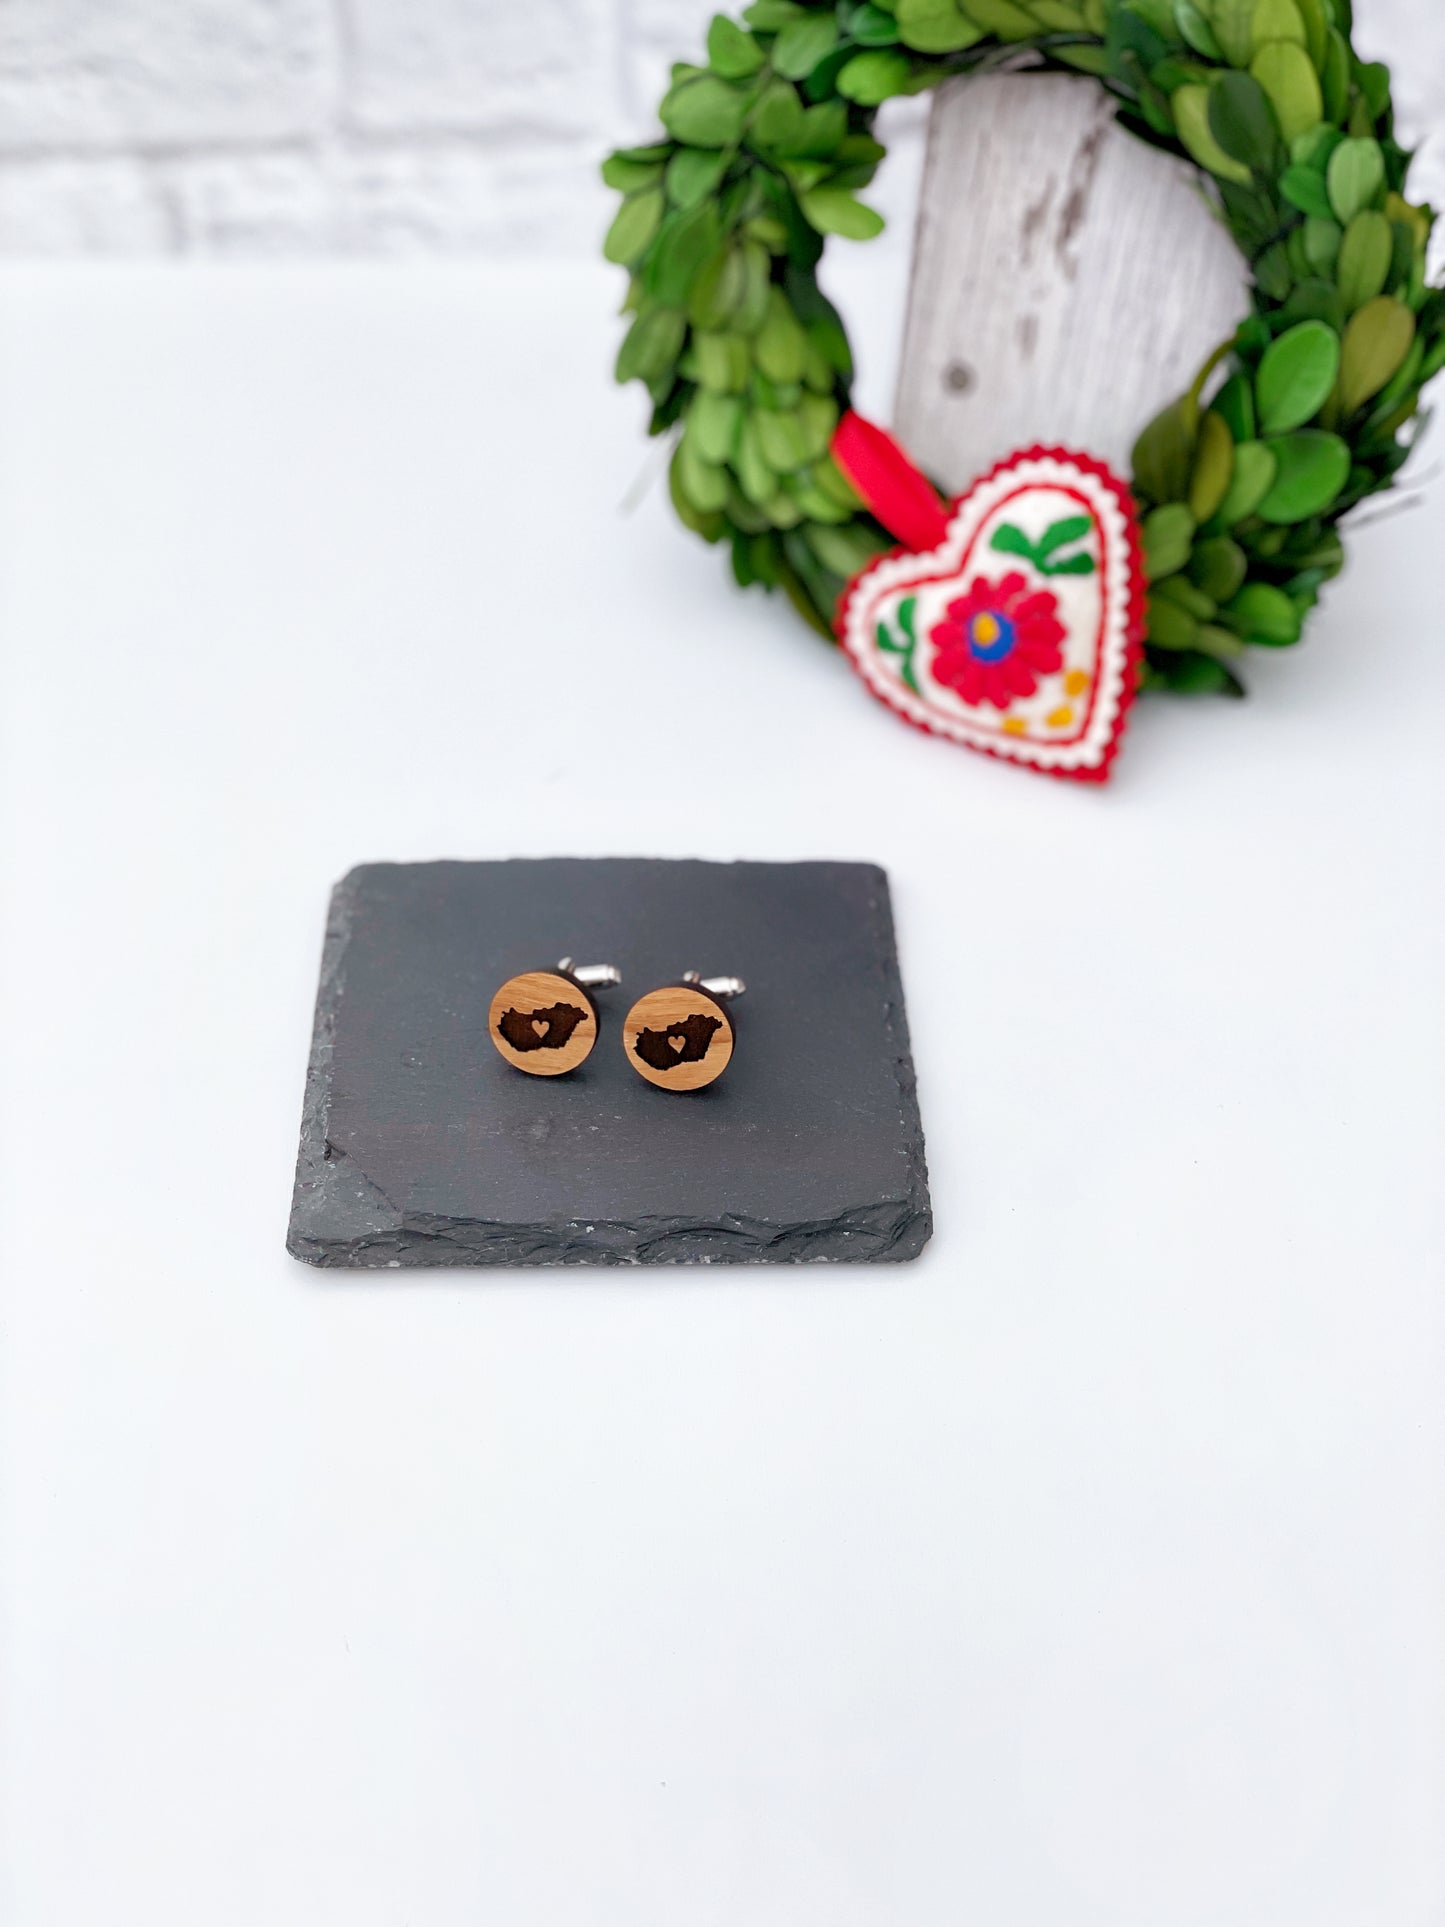 Engraved wood Hungarian cufflinks, Hungary cufflinks with tiny heart